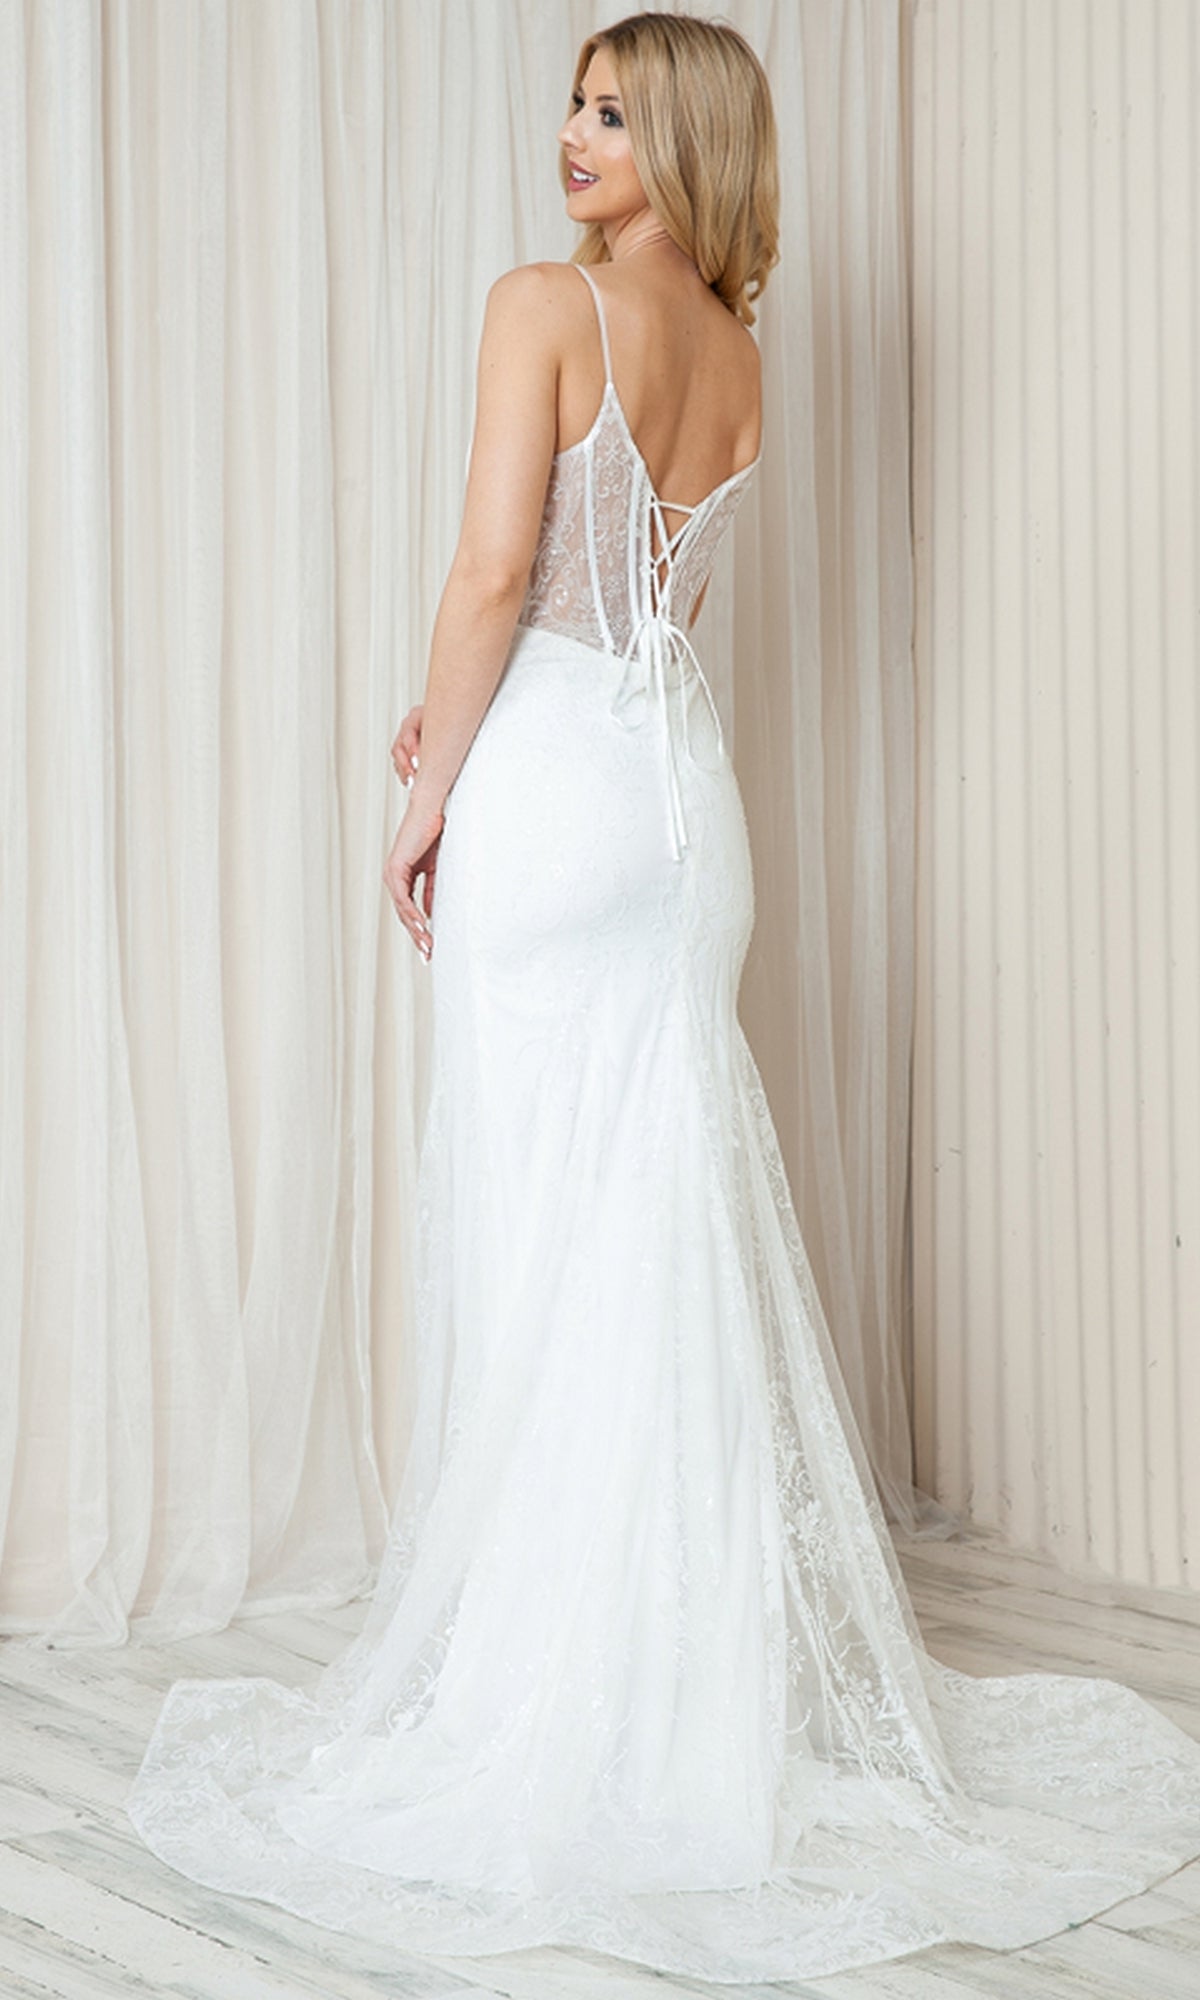 Sheer-Corset Long Glitter-Print Prom Dress BZ015